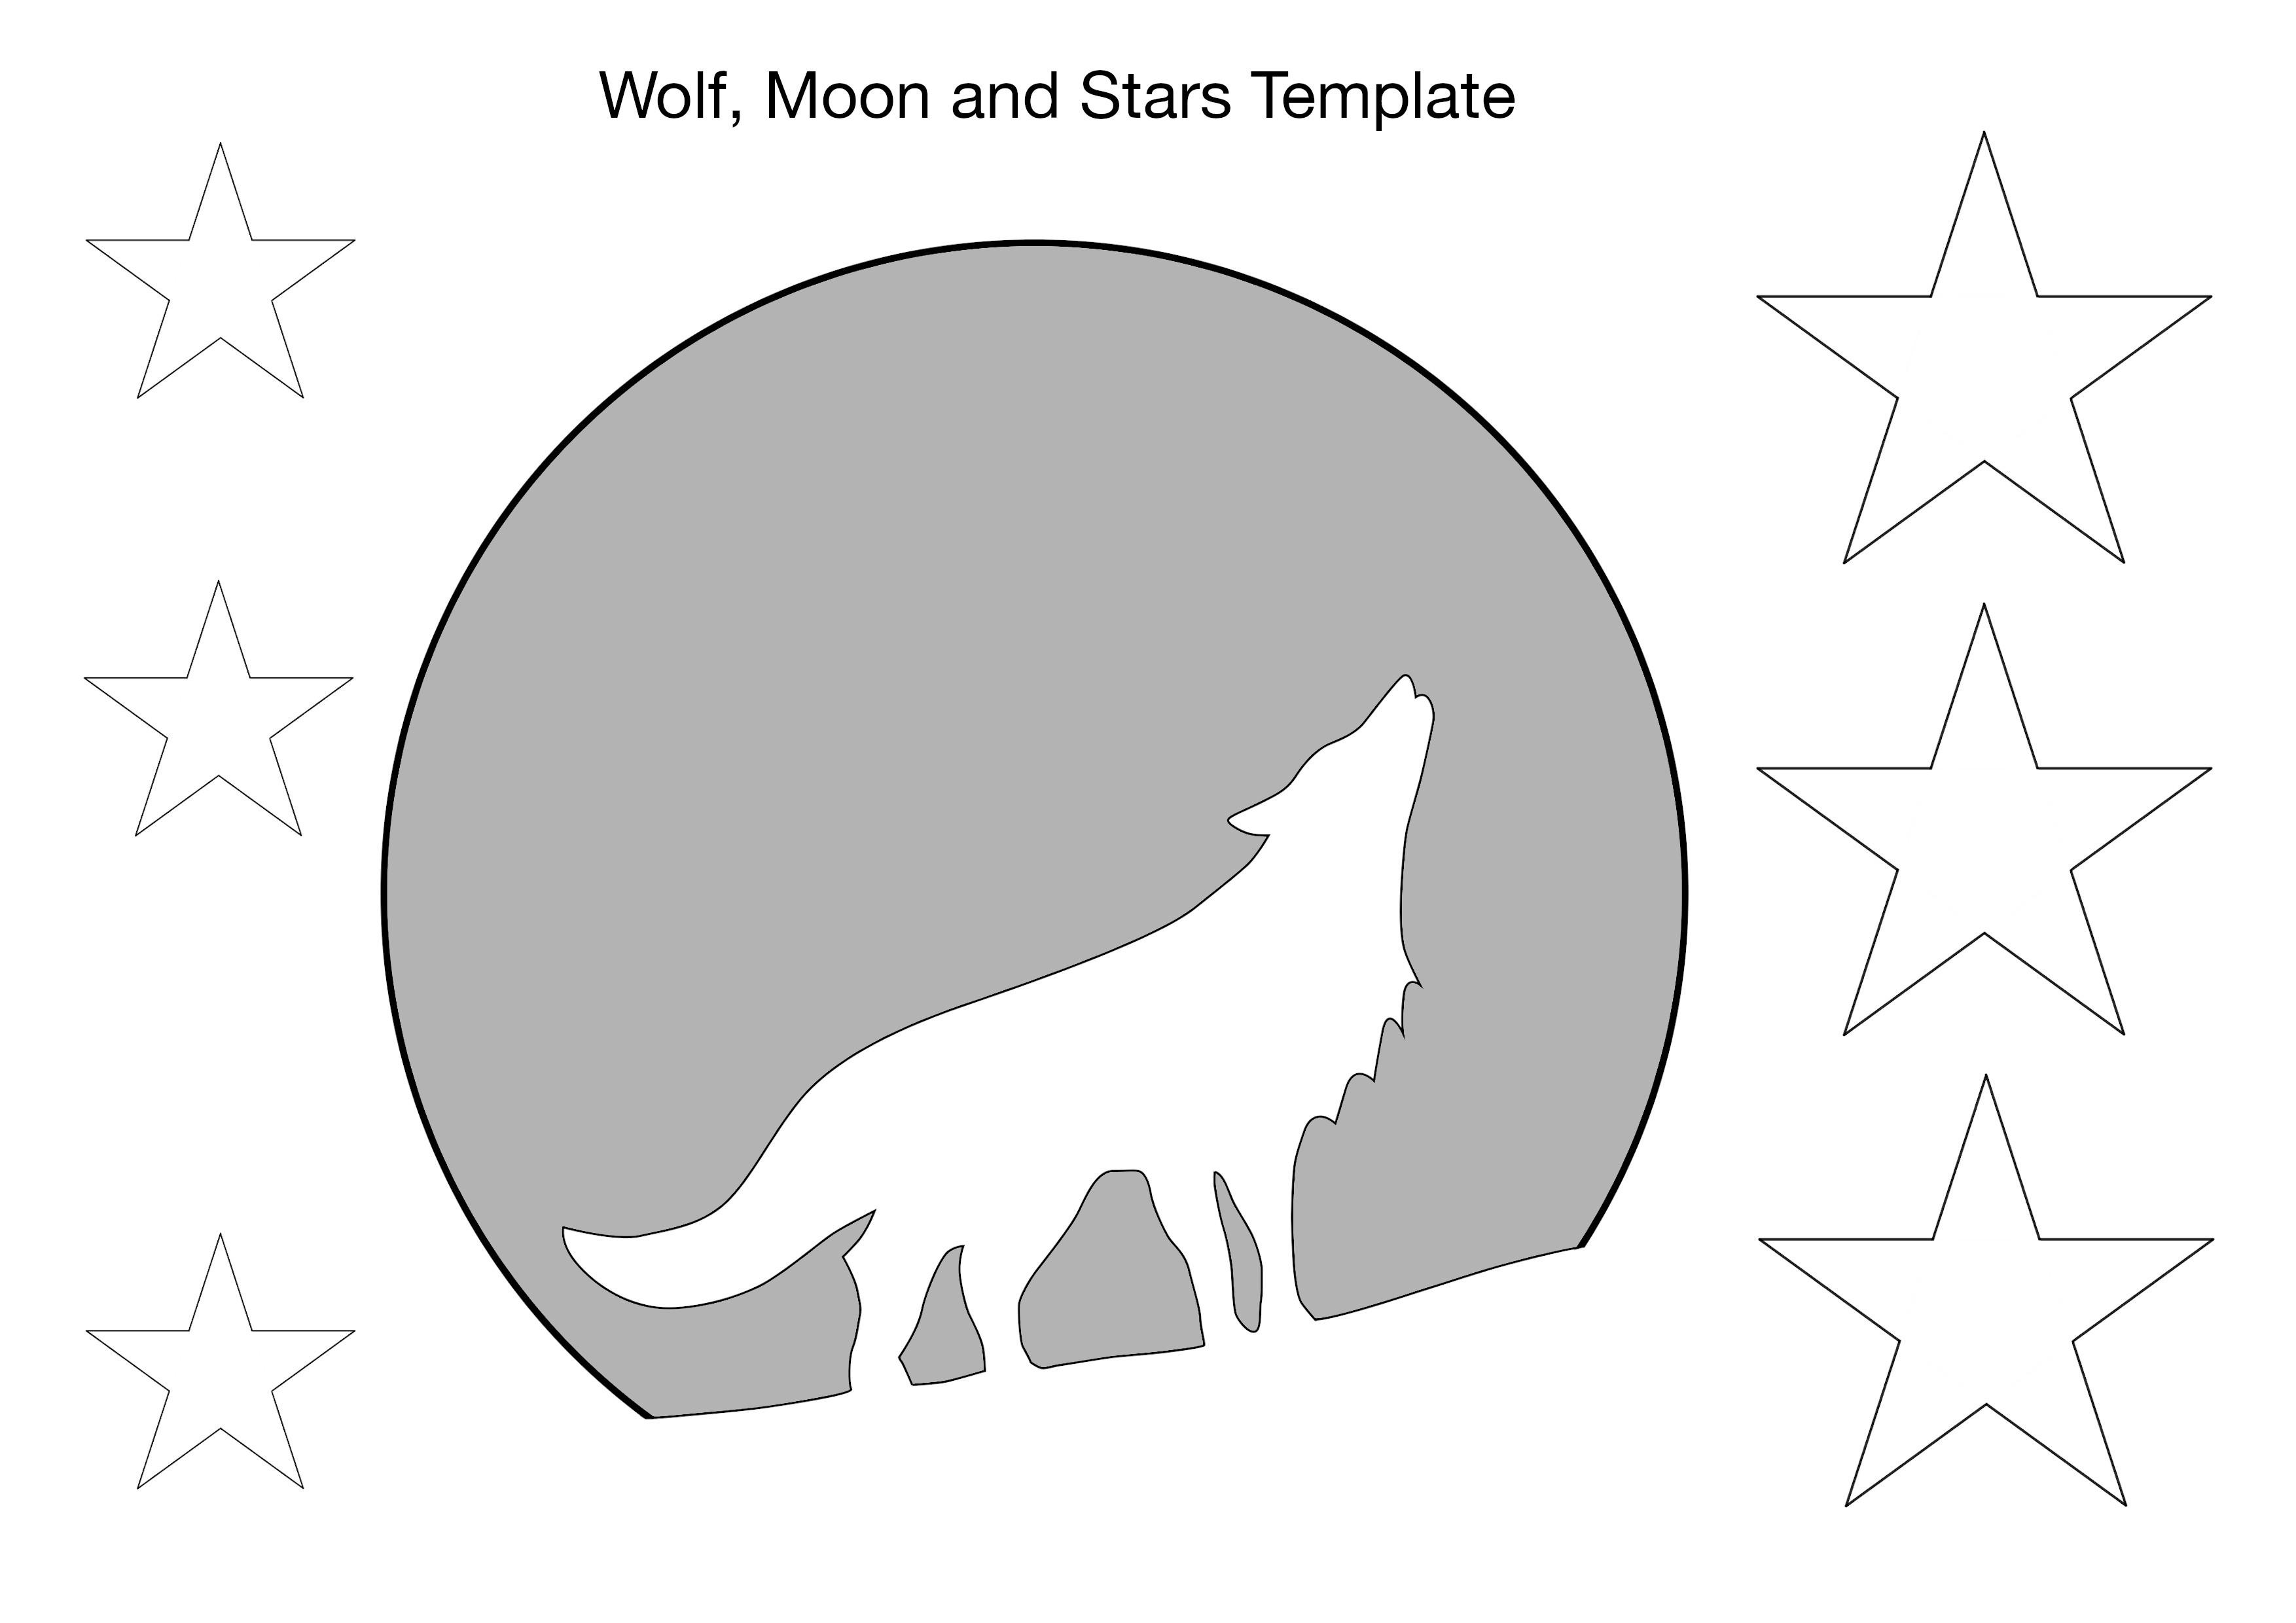 wolf template large2.jpg